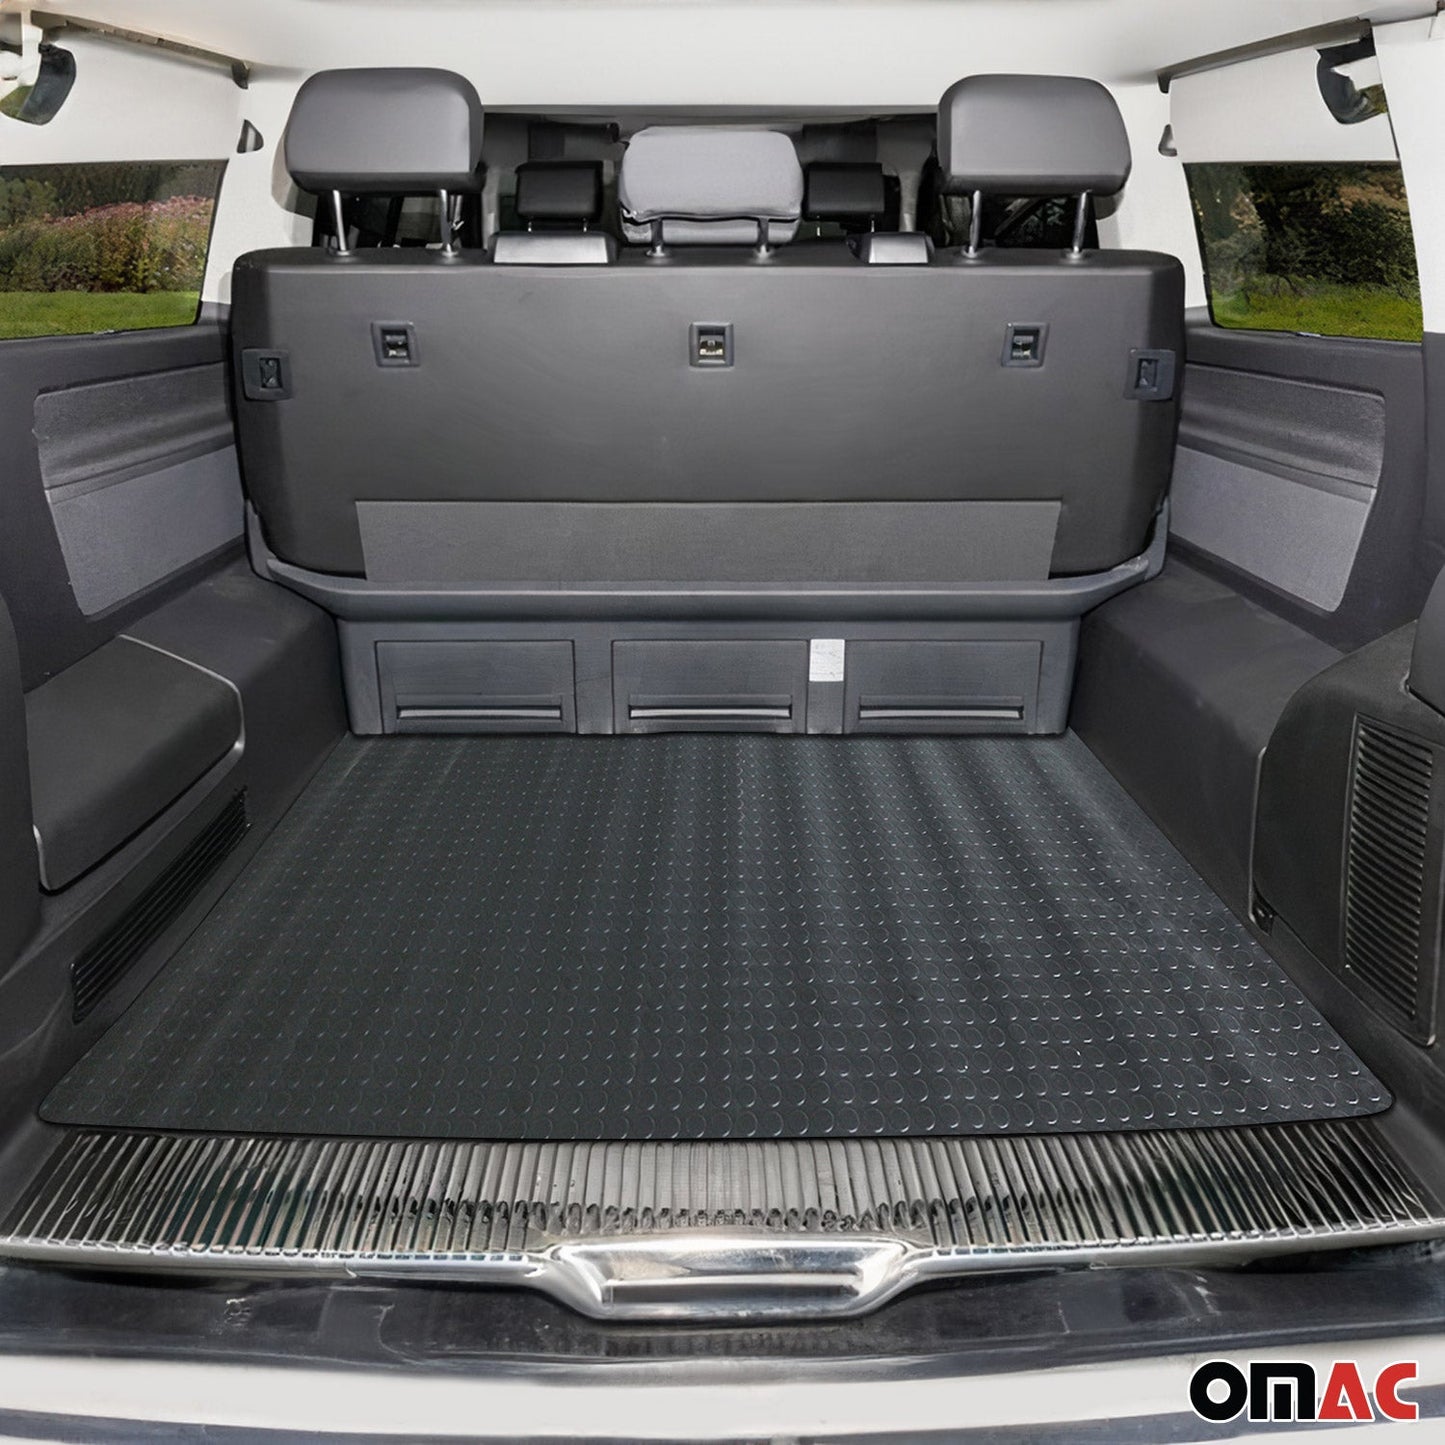 OMAC Rubber Trunk Mat Pickup Truck Bed Liner Trimmable Flooring Mat Black & Grey VRTG002425